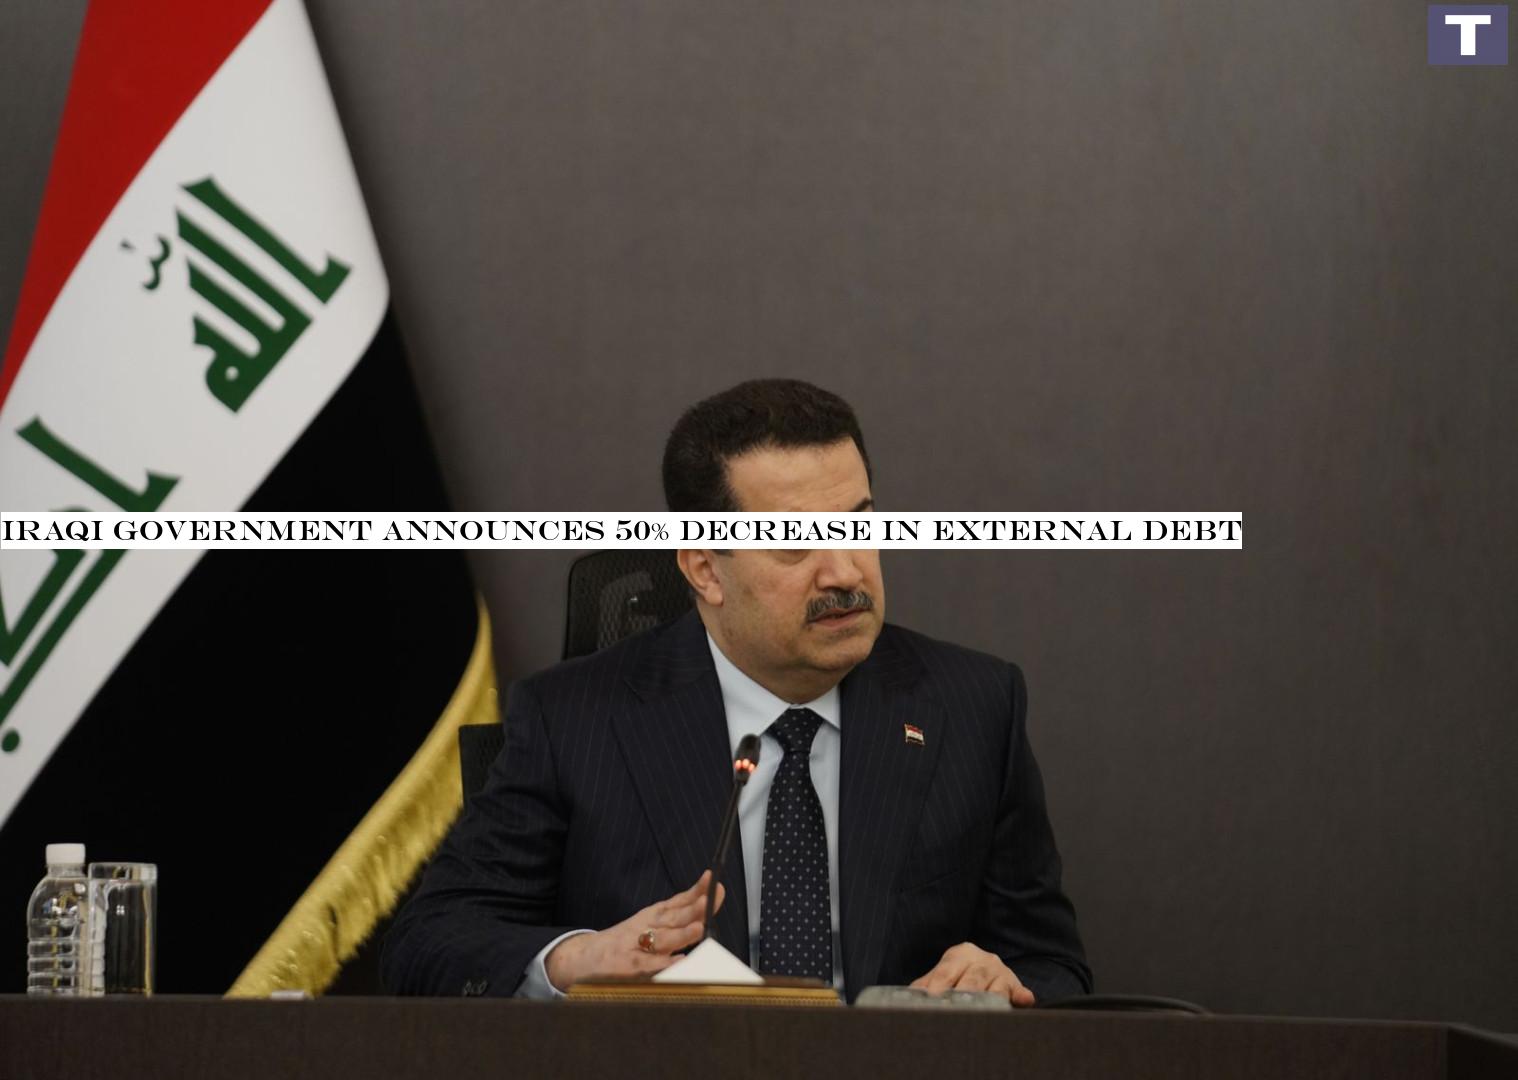 Iraqi government announces 50% decrease in external debt